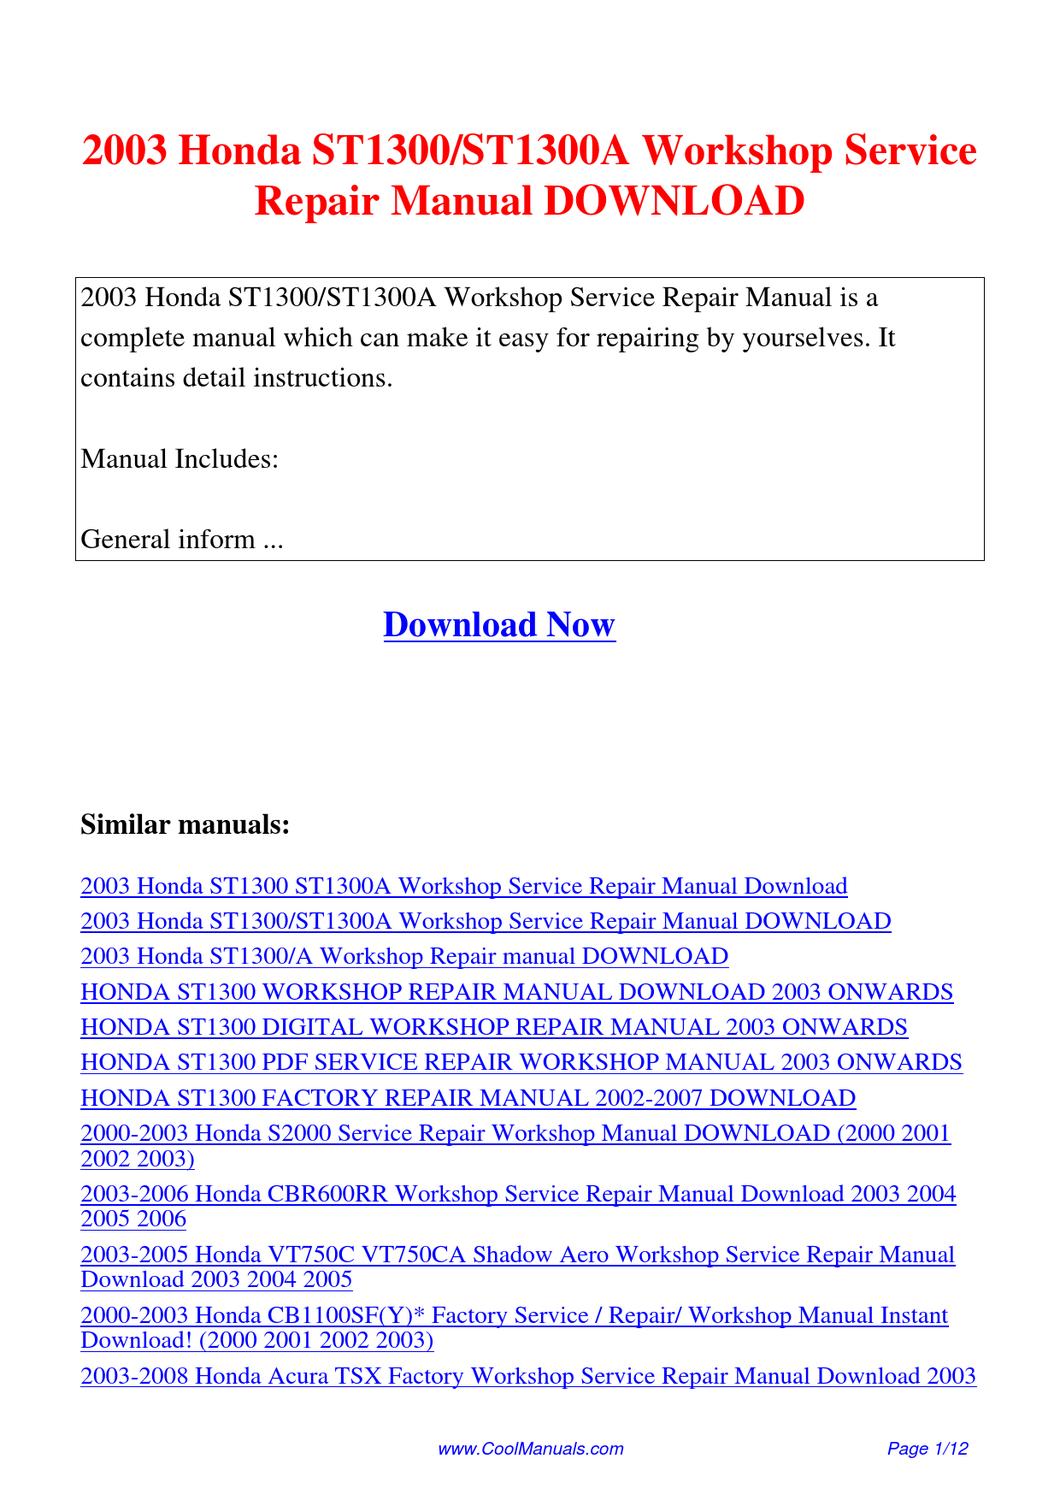 2004 honda cbr600rr service manual pdf